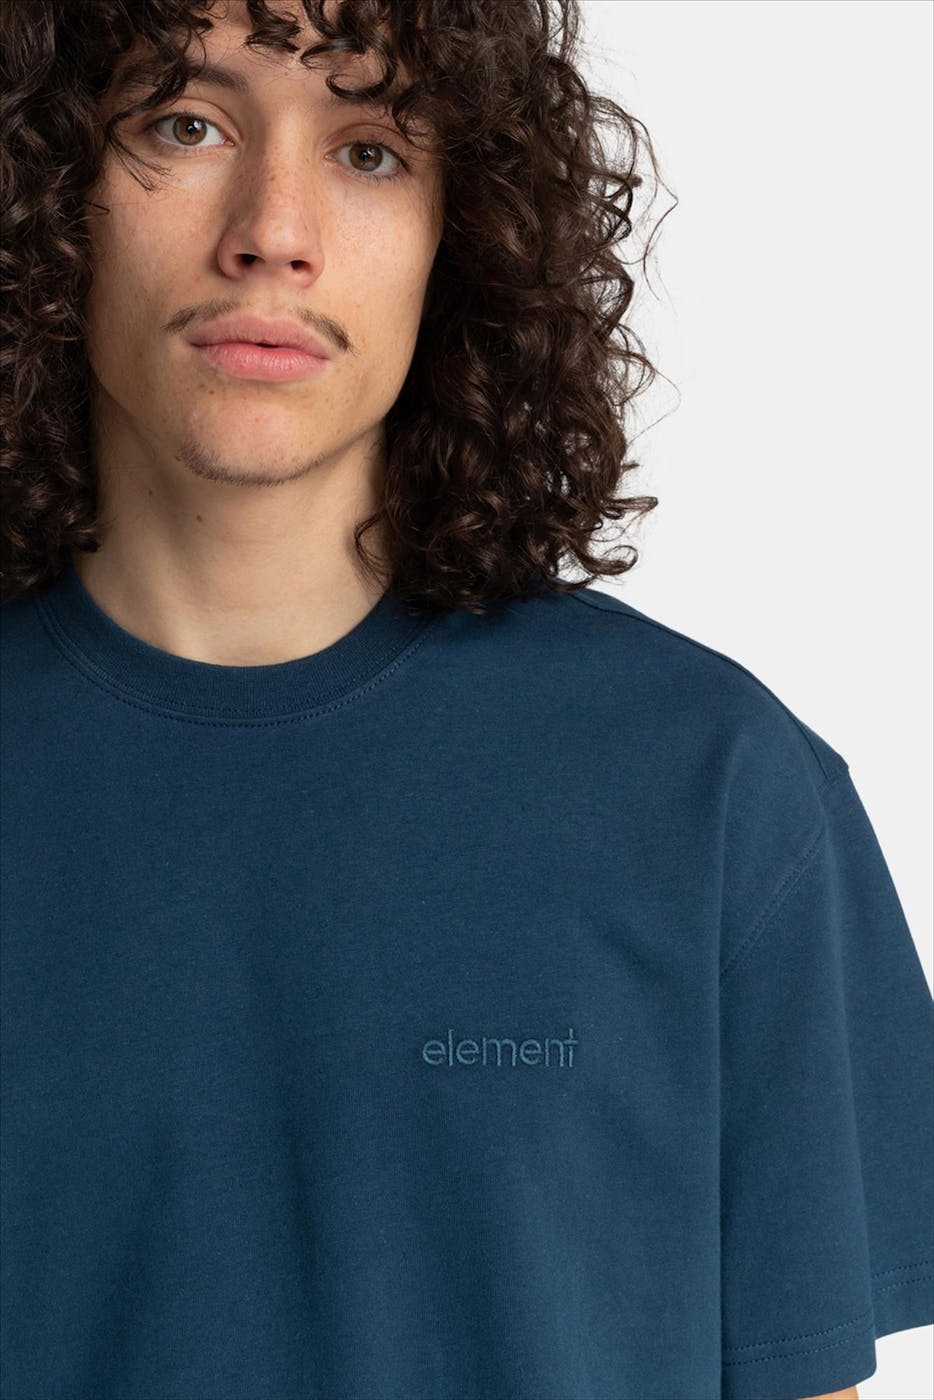 Element - Blauwe Crails T-shirt